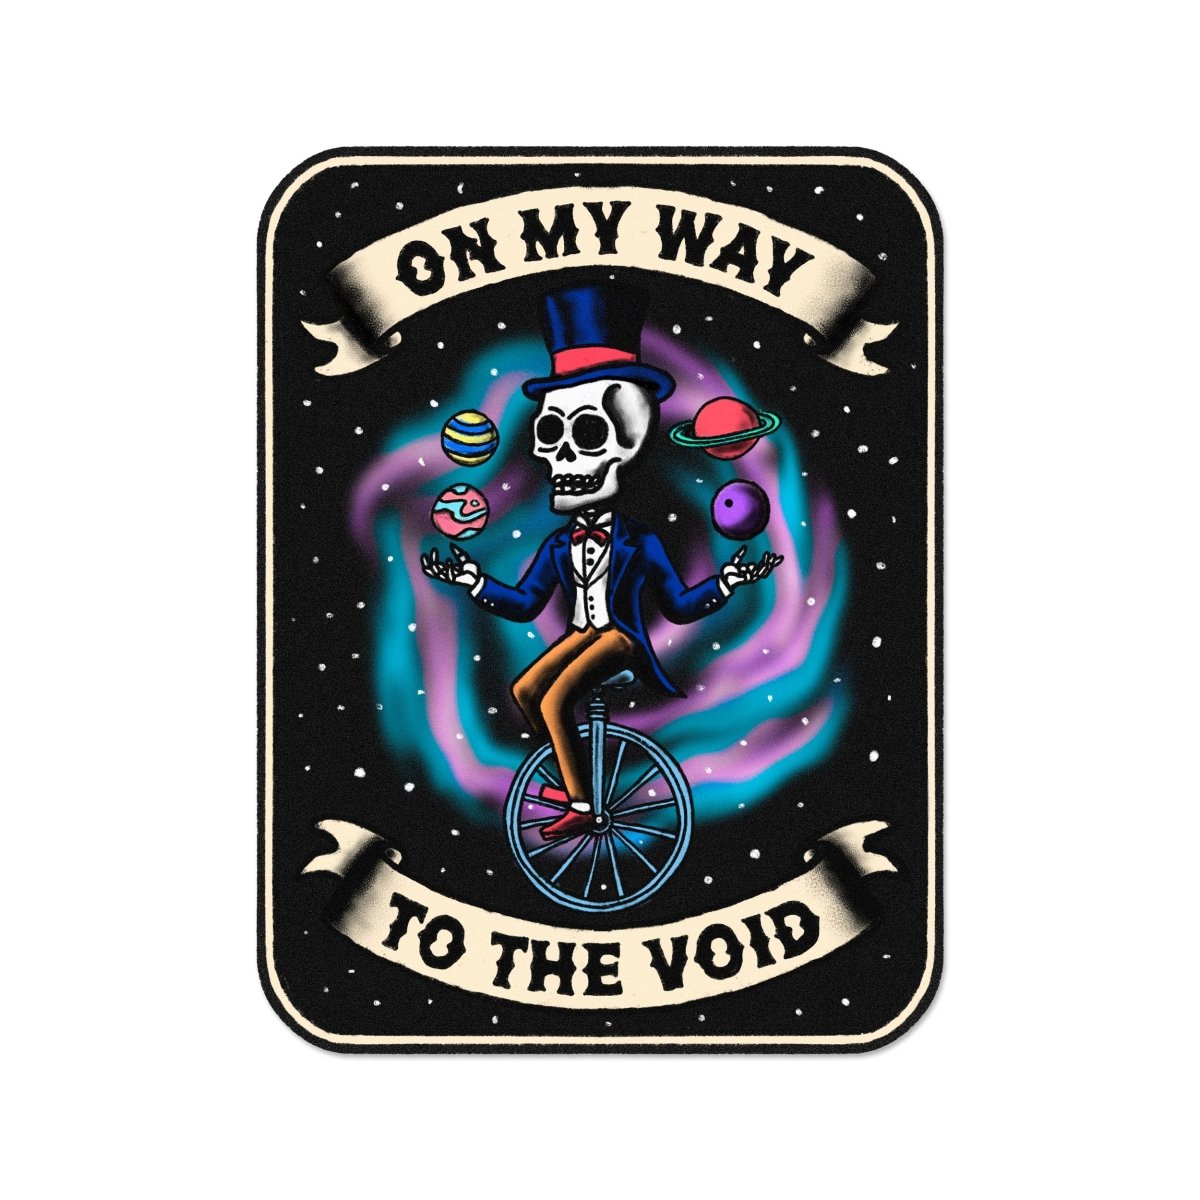 On my way to the void bumper sticker - Sticker - Pretty Bad Co.